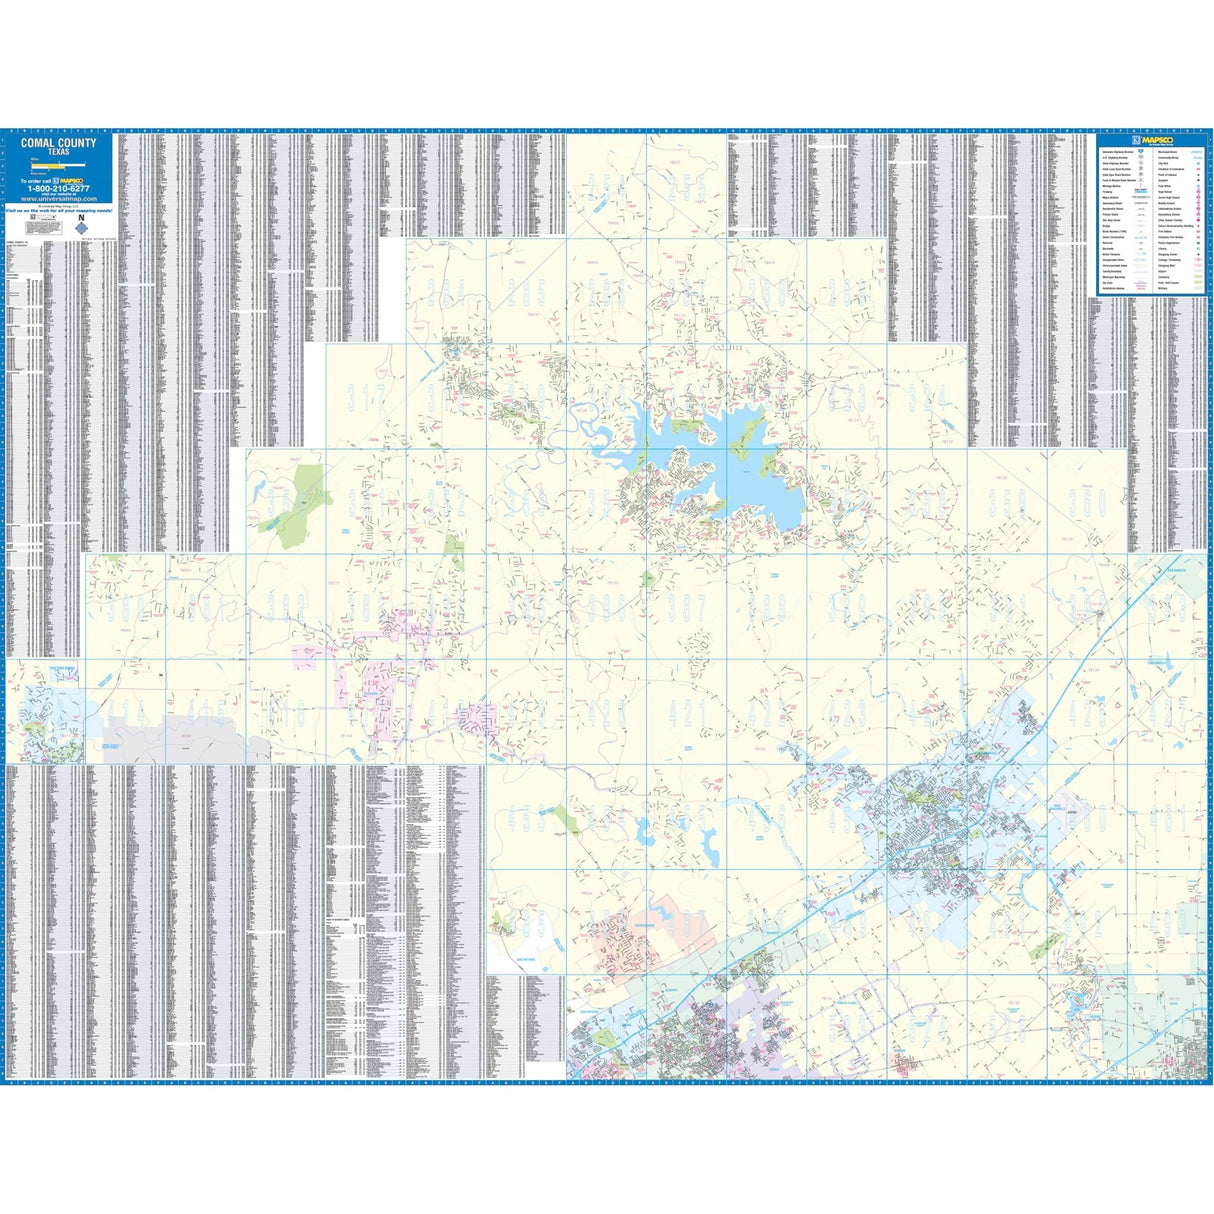 New Braunfels & Comal County, TX Wall Map - KA-C-TX-NEWBRAUNFELS-PAPER - Ultimate Globes